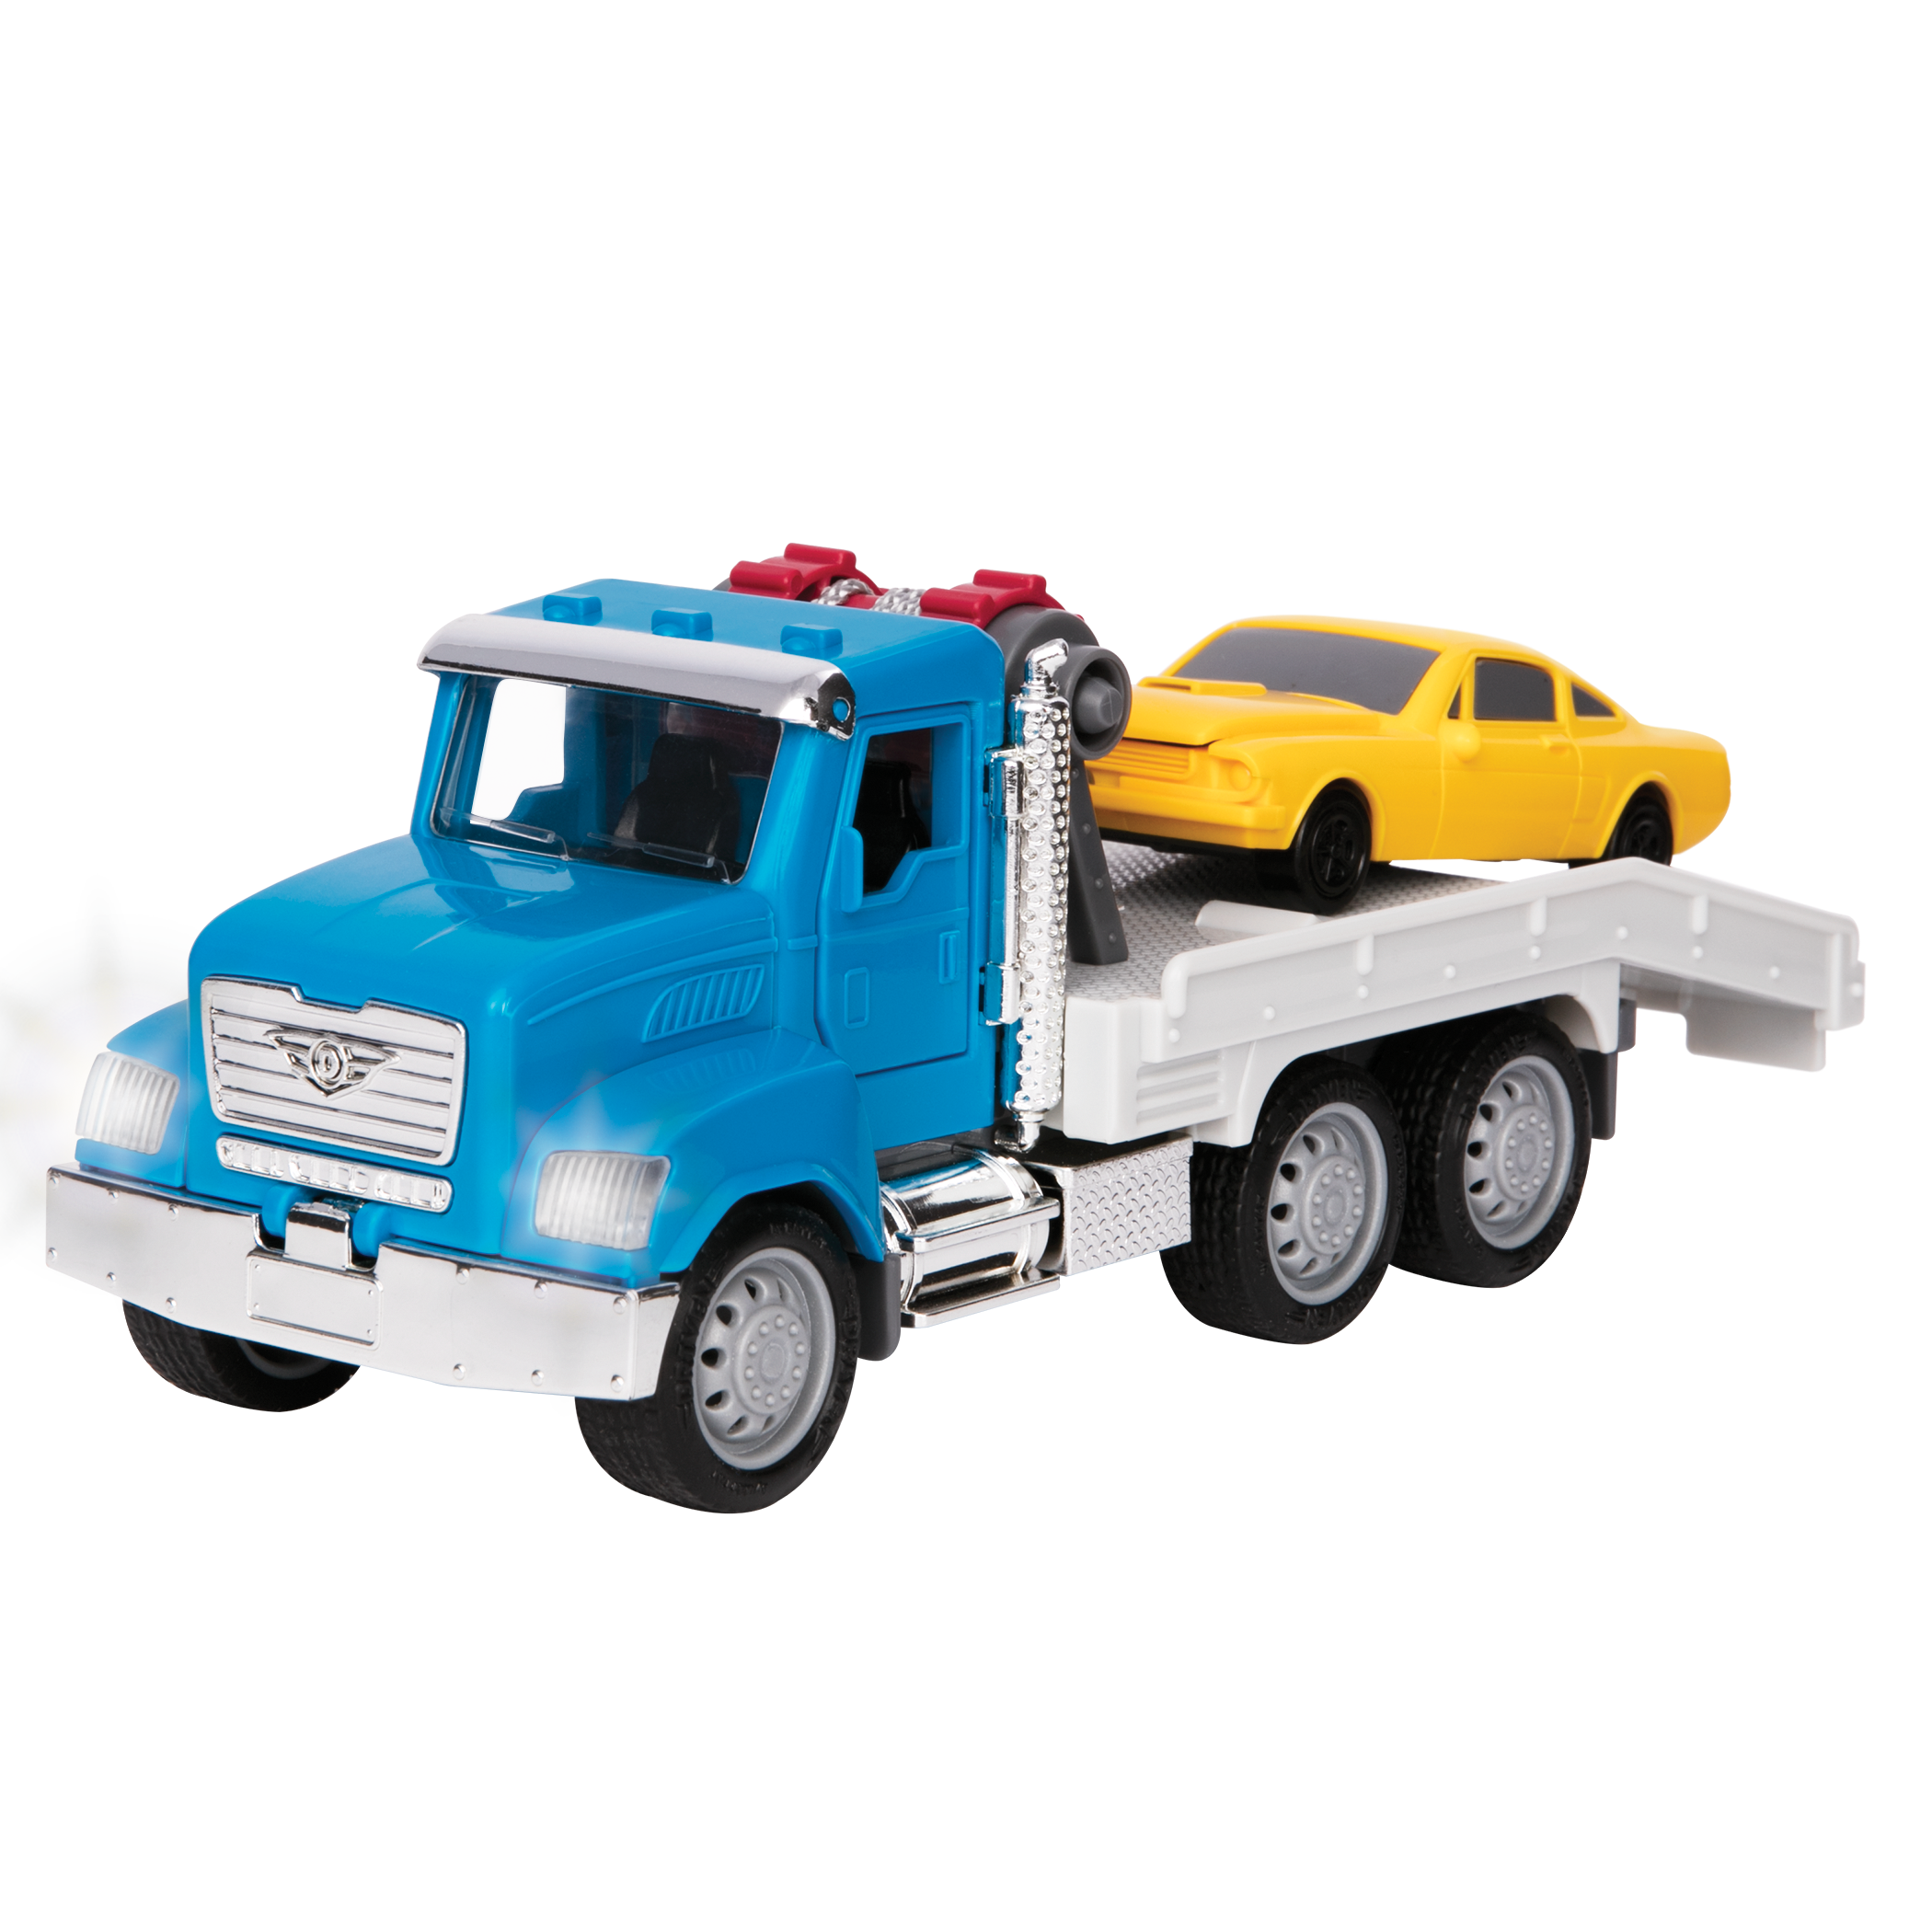 Driven- Dépanneuse by Battat for Kids – City Vehicle Toy – Lights